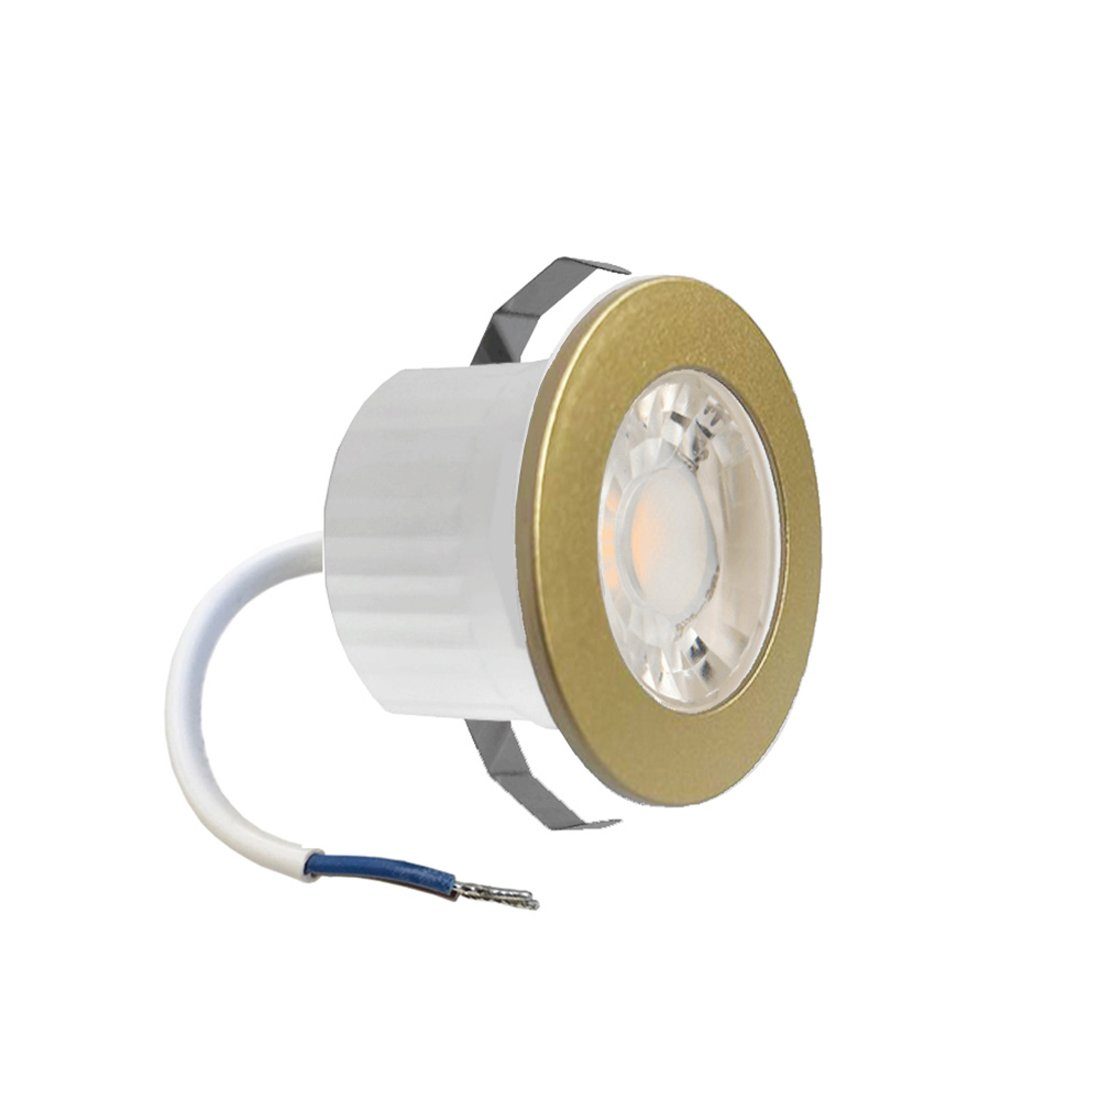 Braytron LED Einbaustrahler 3w Mini LED Einbauleuchte Einbaustrahler Einbauspot Spot Gold 240, mini einbauspot Rahmenfarbe Gold IP54 Wasserdicht 4000K neutralweiß | Strahler